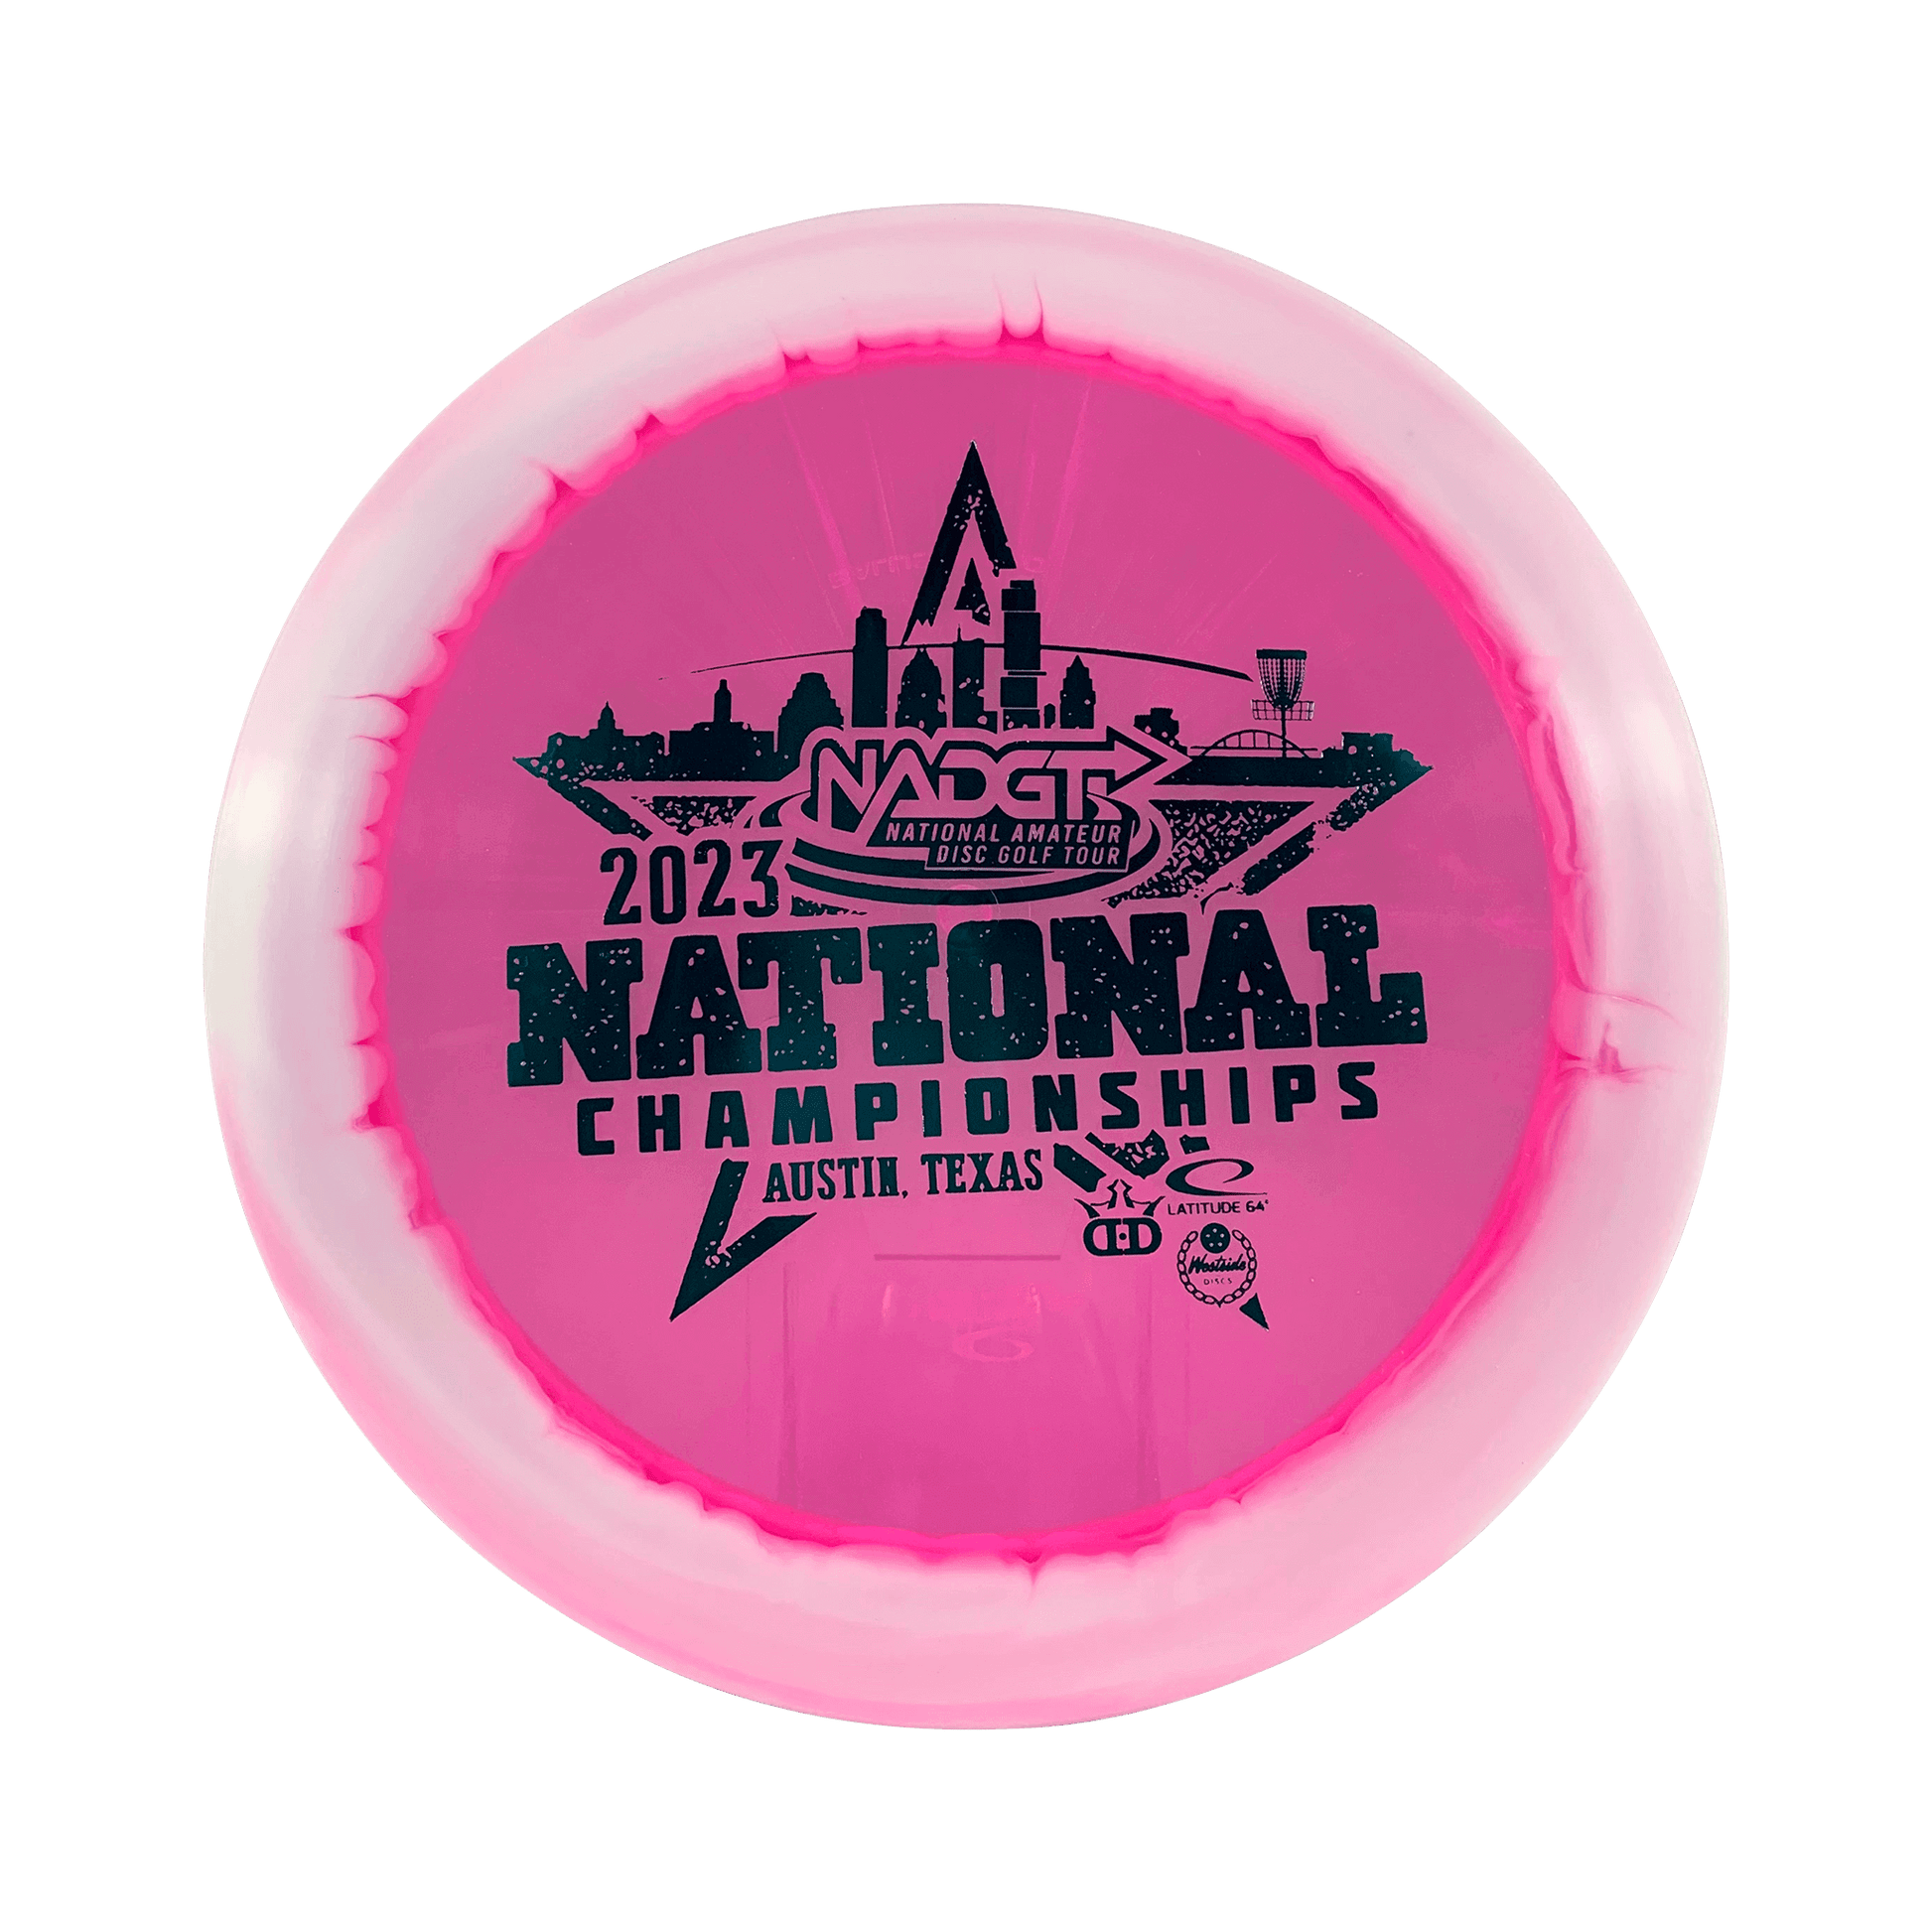 Opto Ice Orbit Ballista Pro - NADGT National Championship 2023 Disc Latitude 64 multi / pink 173 